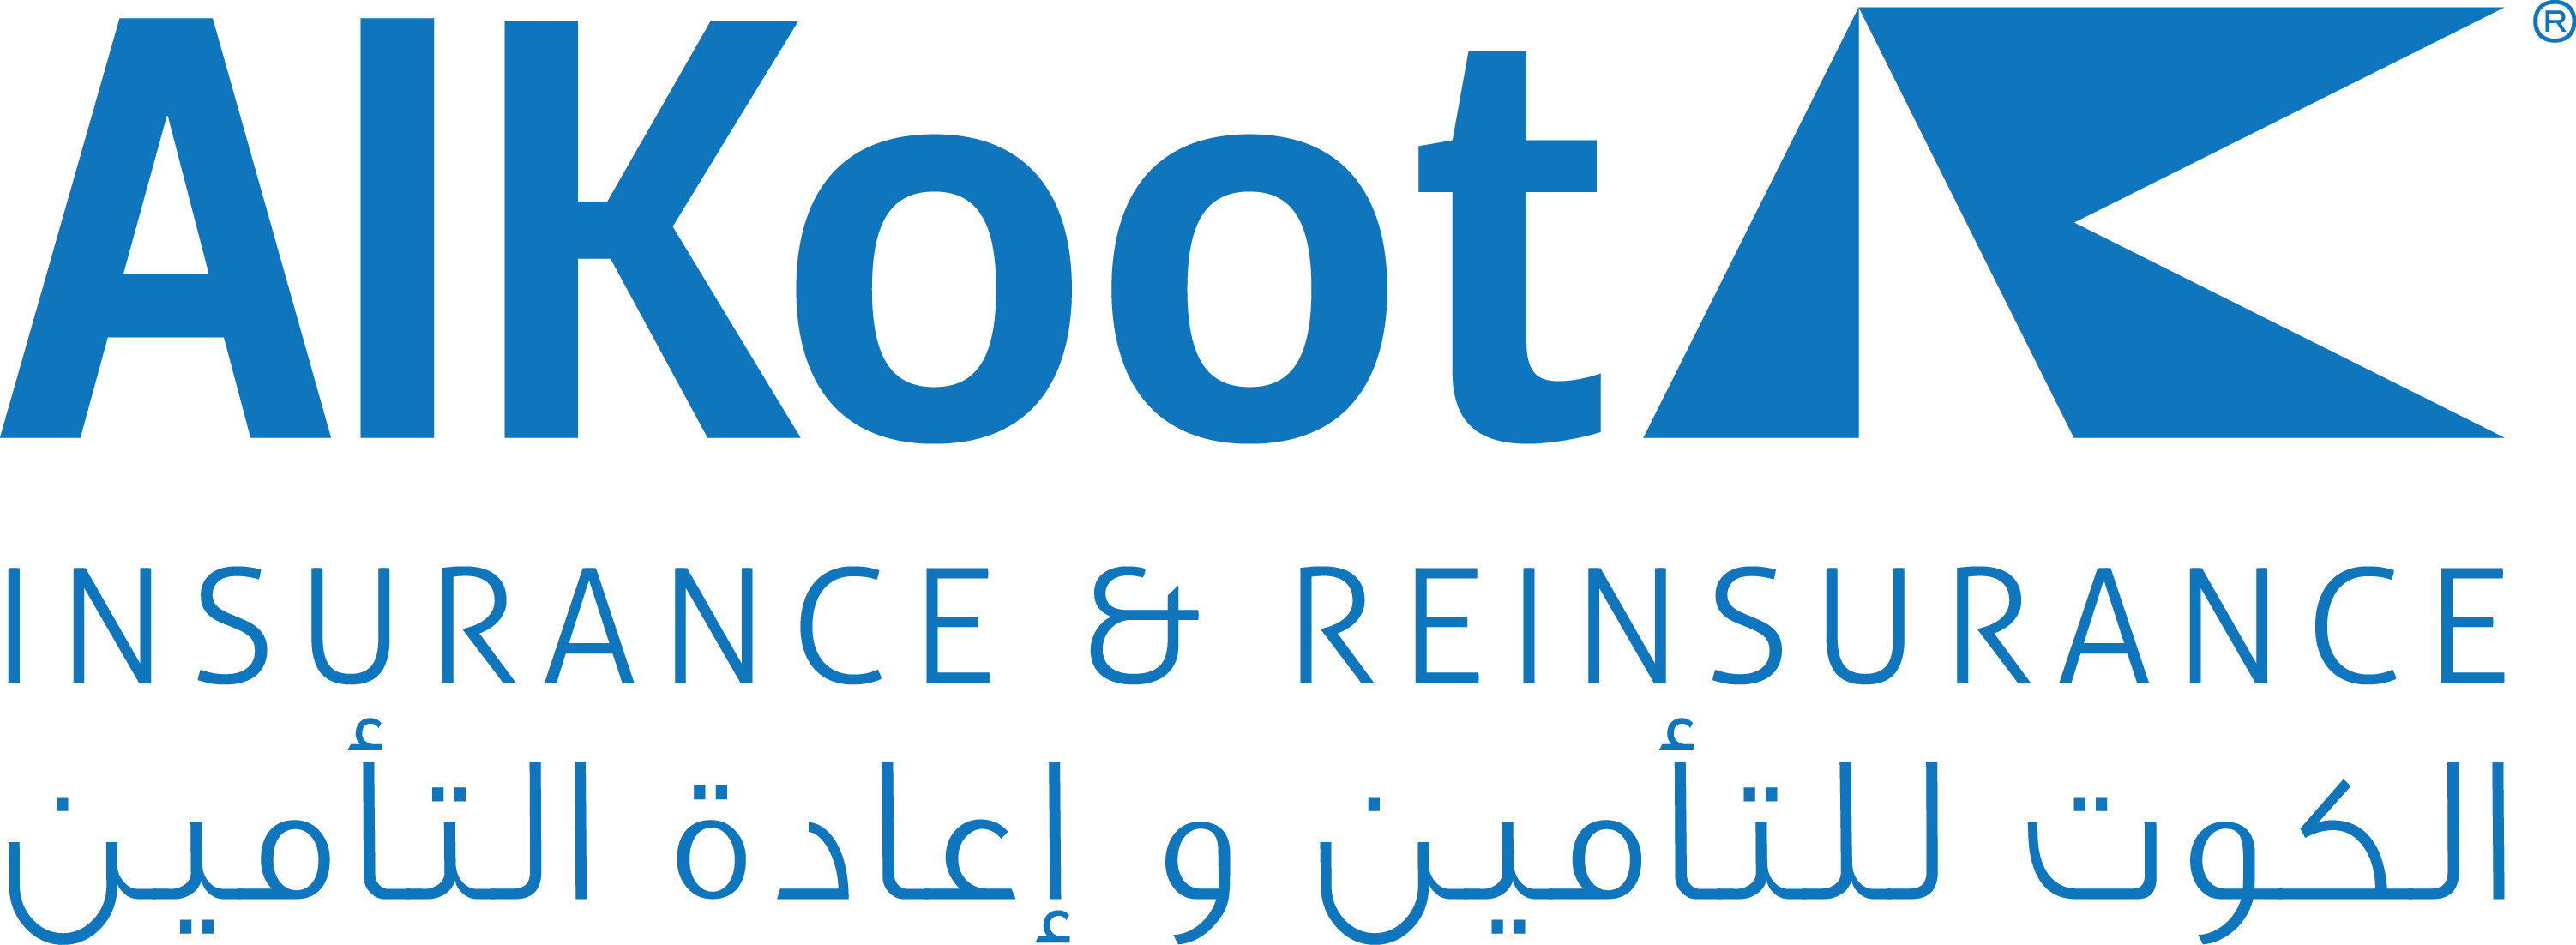 Al Koot New Logo 